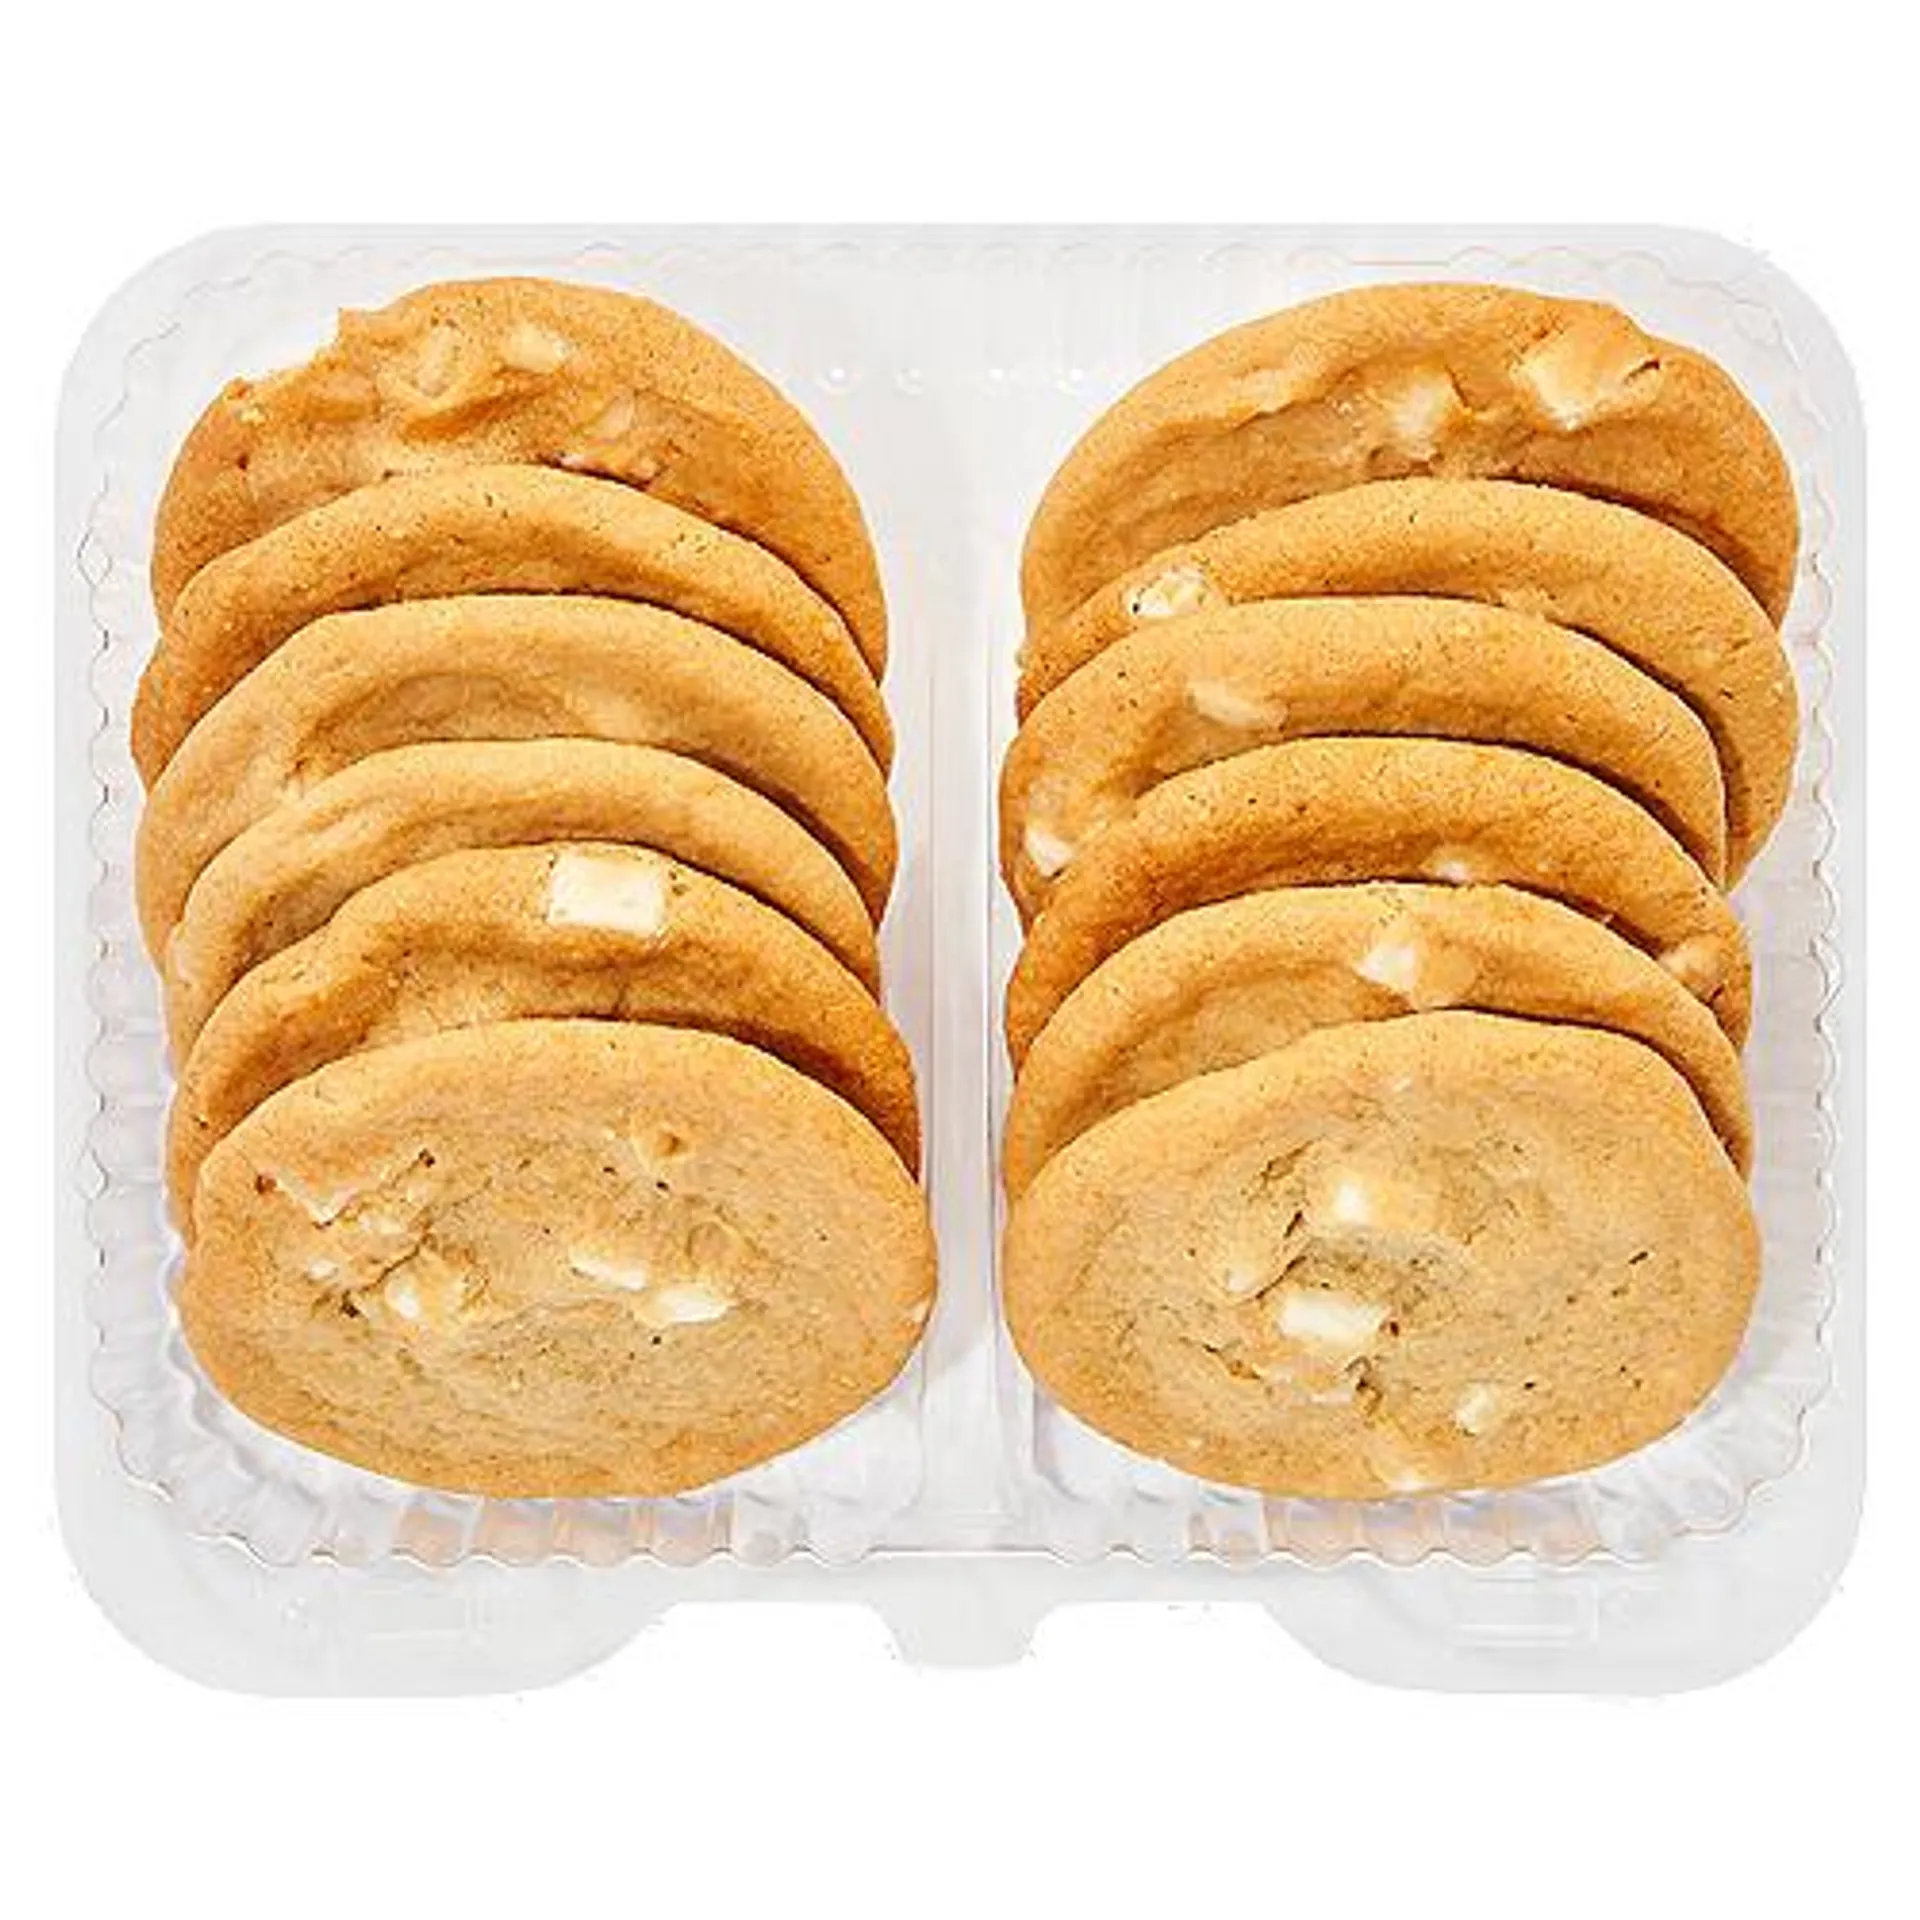 12 Pack Gourmet White Macadamia Nut Cookies